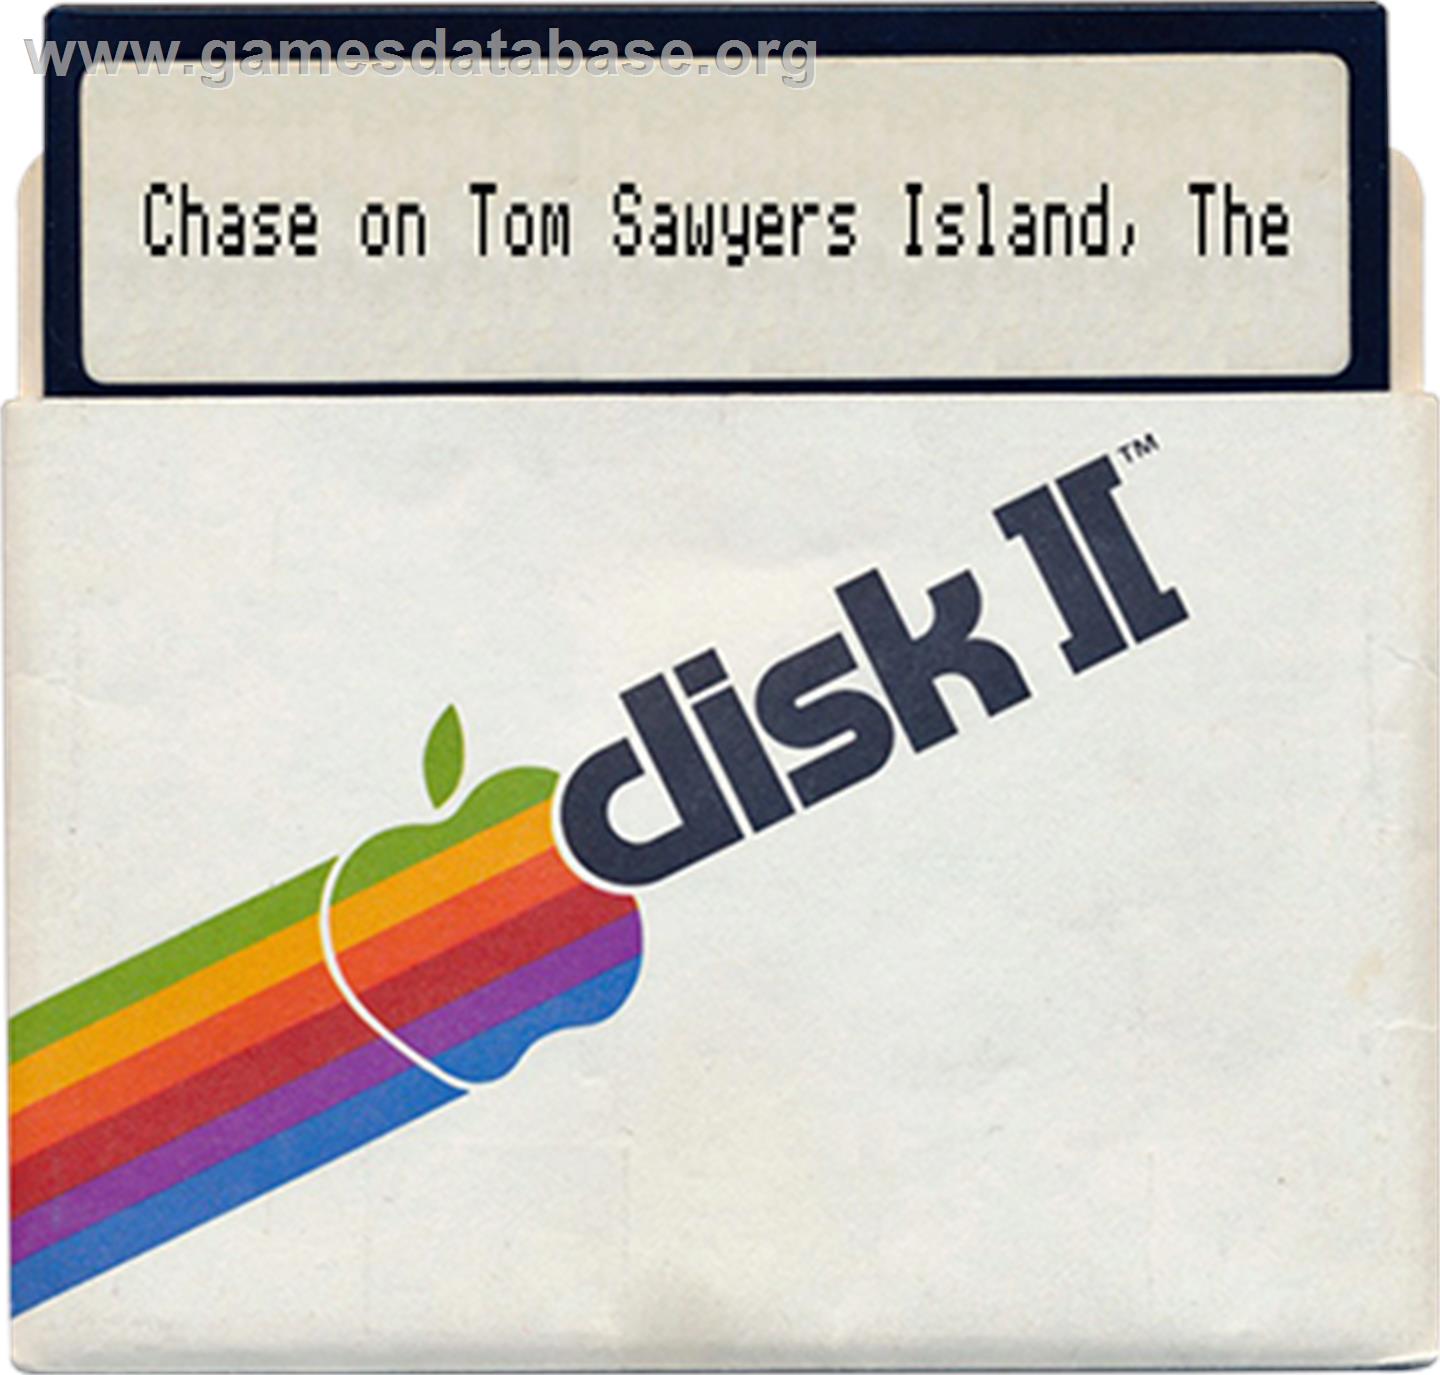 Chase on Tom Sawyer's Island - Apple II - Artwork - Disc